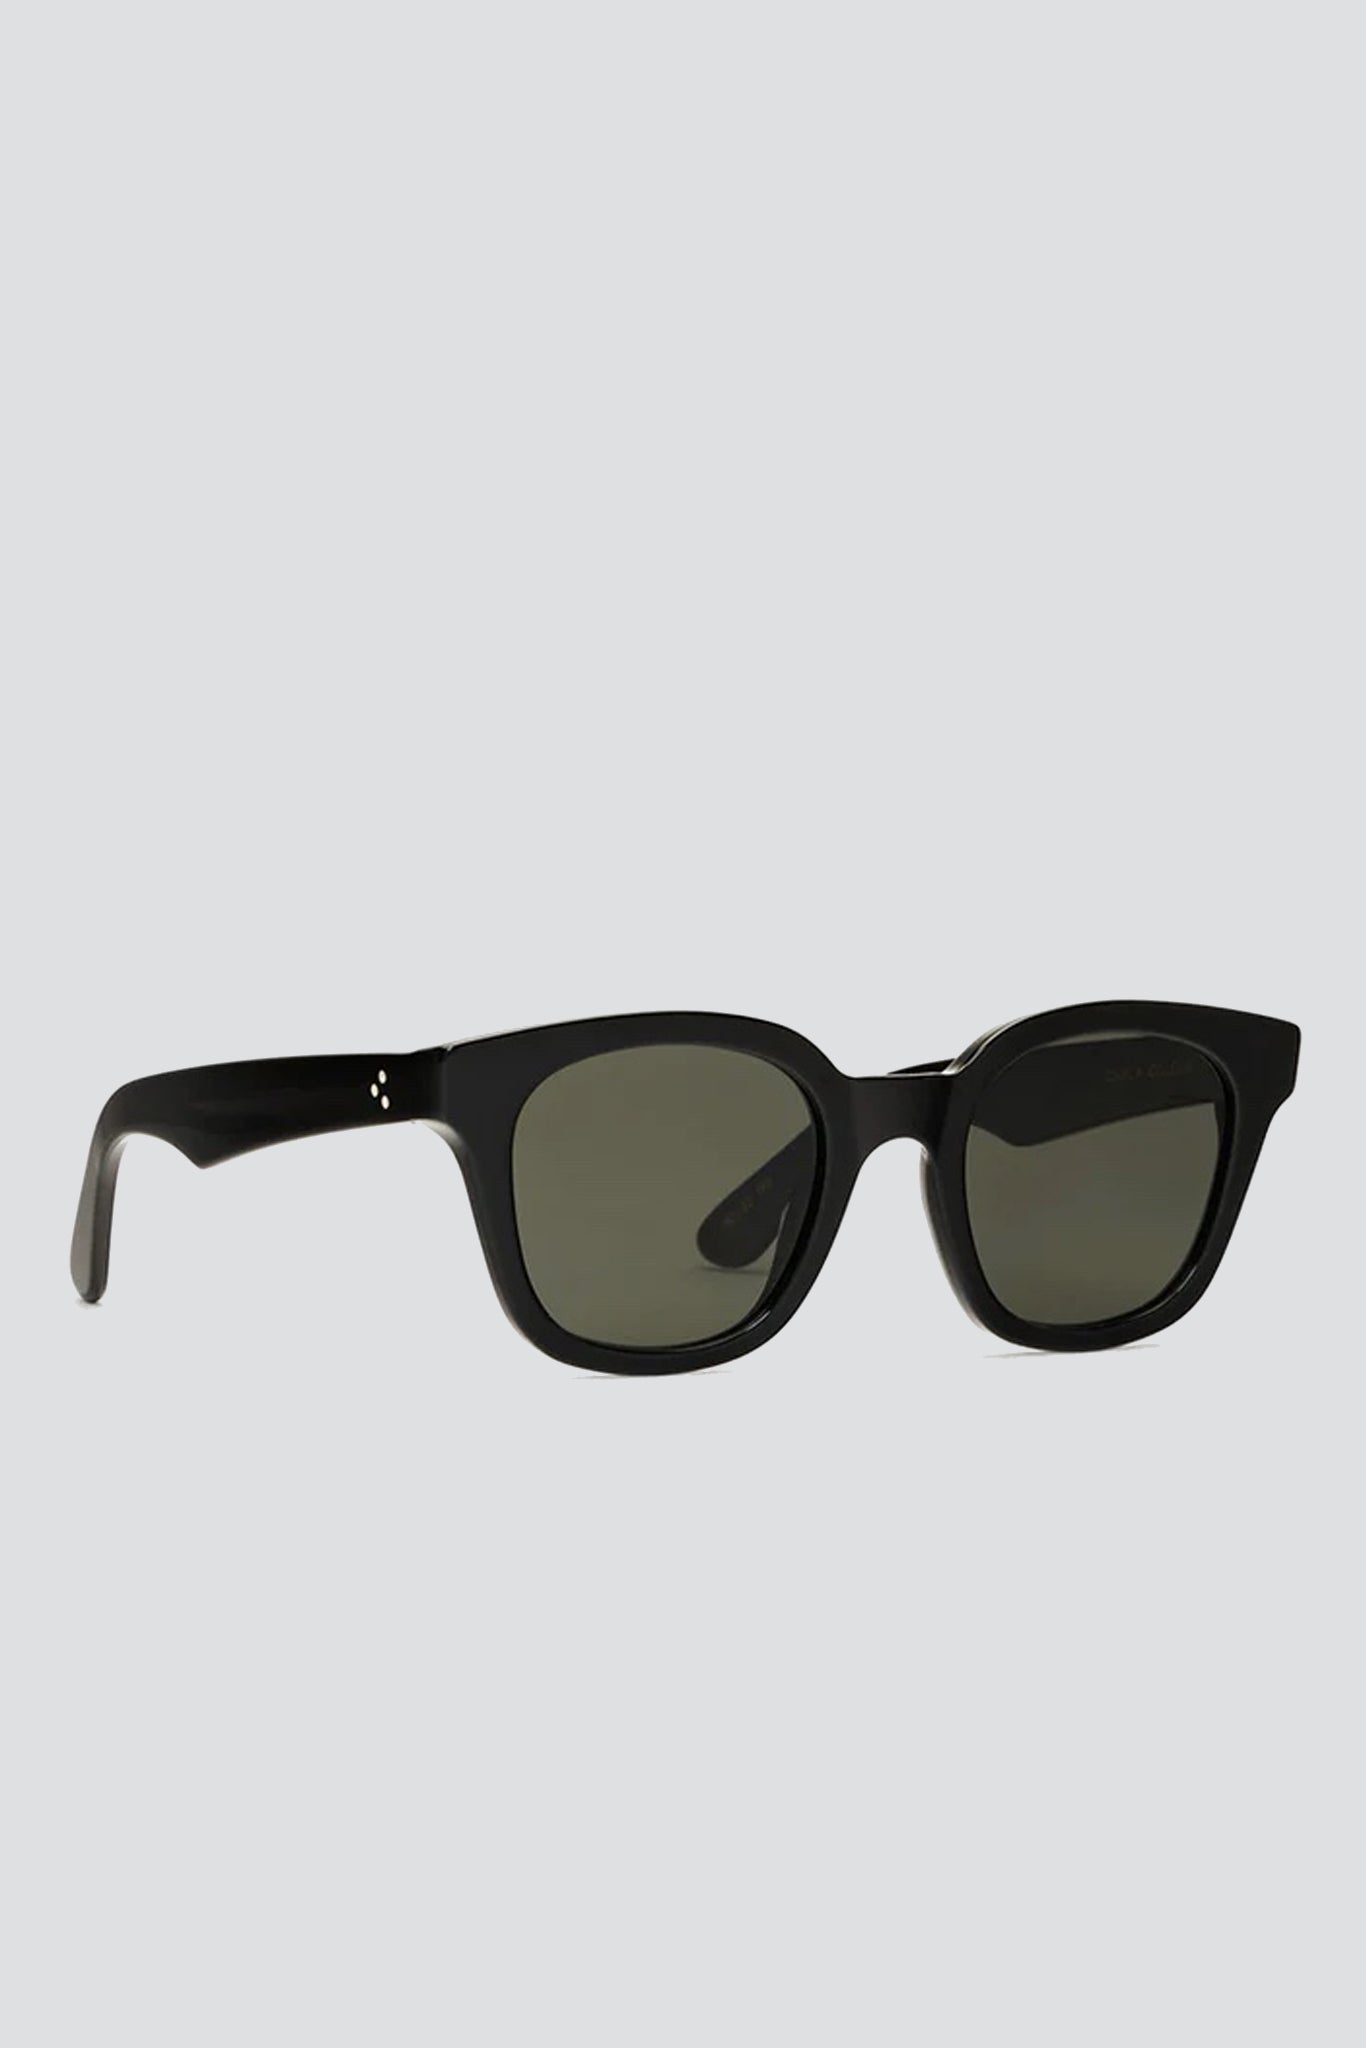 Acetate Warsaw 2 Sunglasses - Black